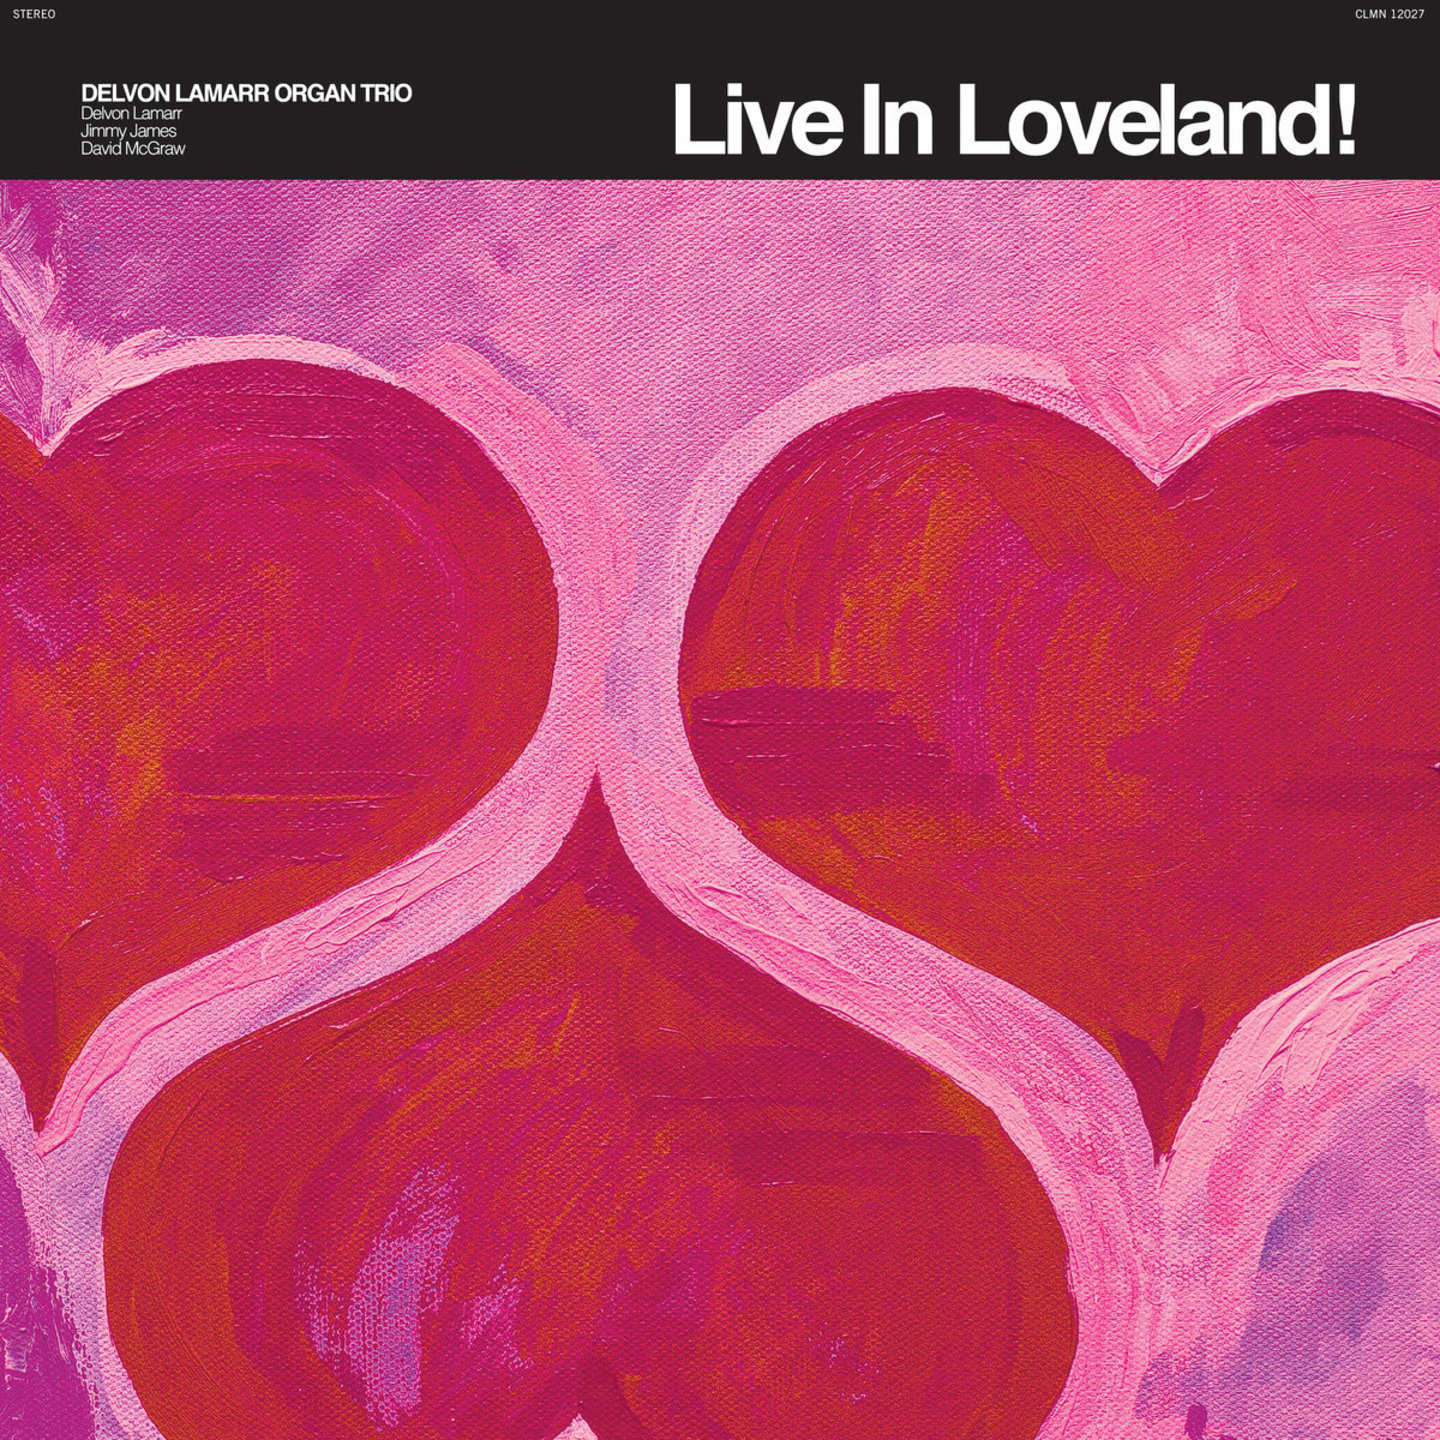 DELVON LAMAR ORGAN TRIO - Live in Loveland 2xLP RSD 2022 Exclusive, Colour vinyl